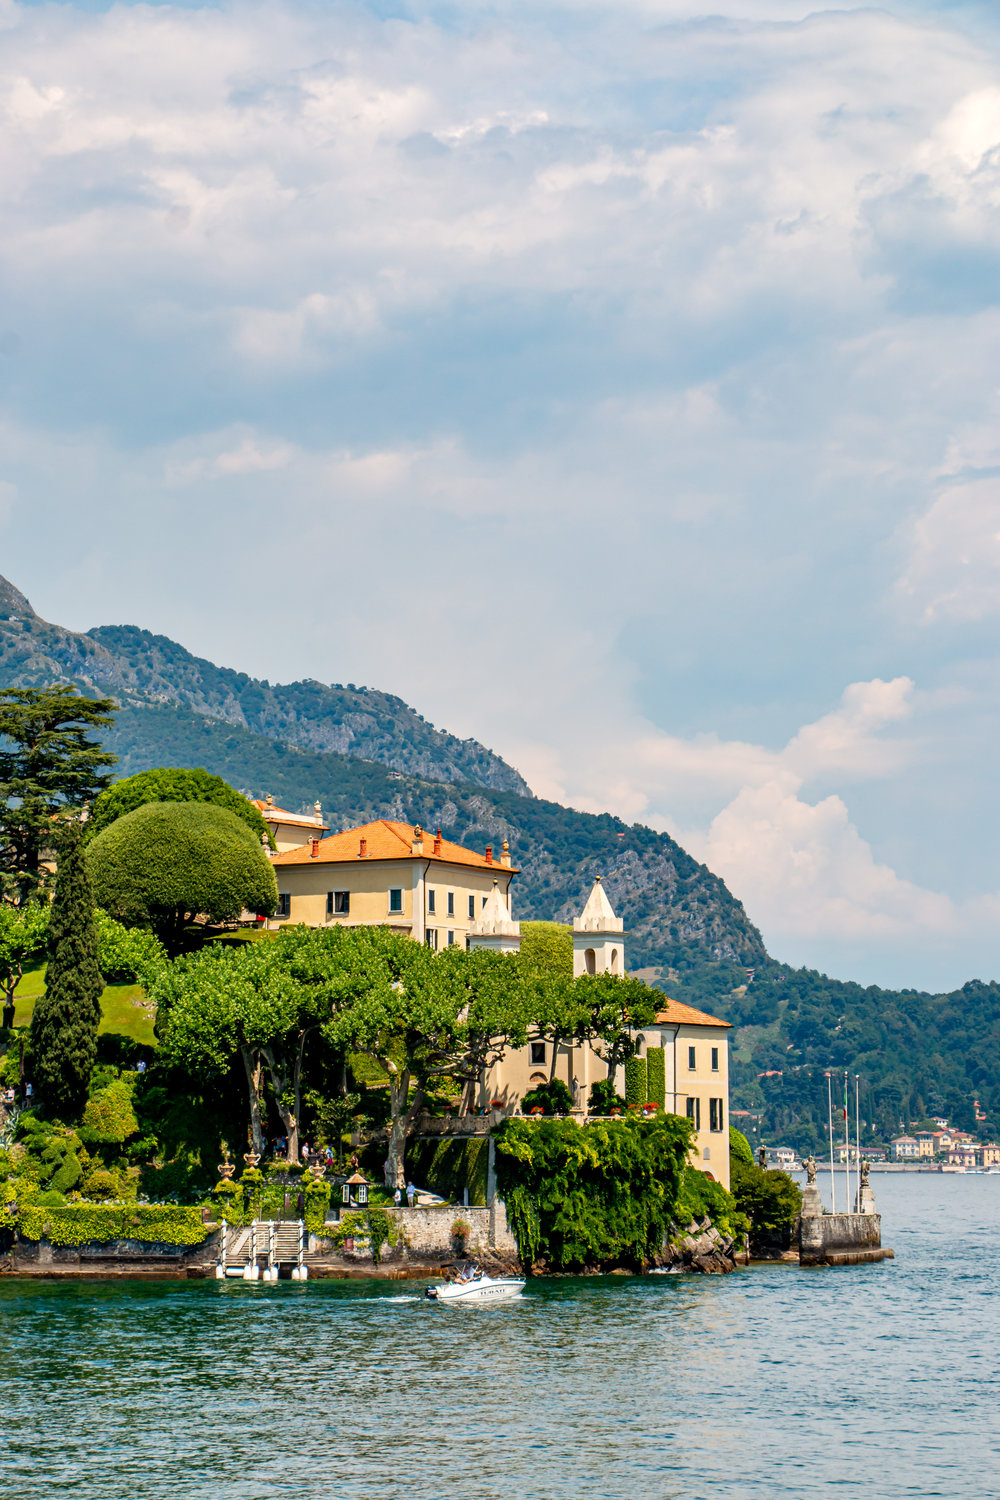 Villa Balbianello - Lake Como